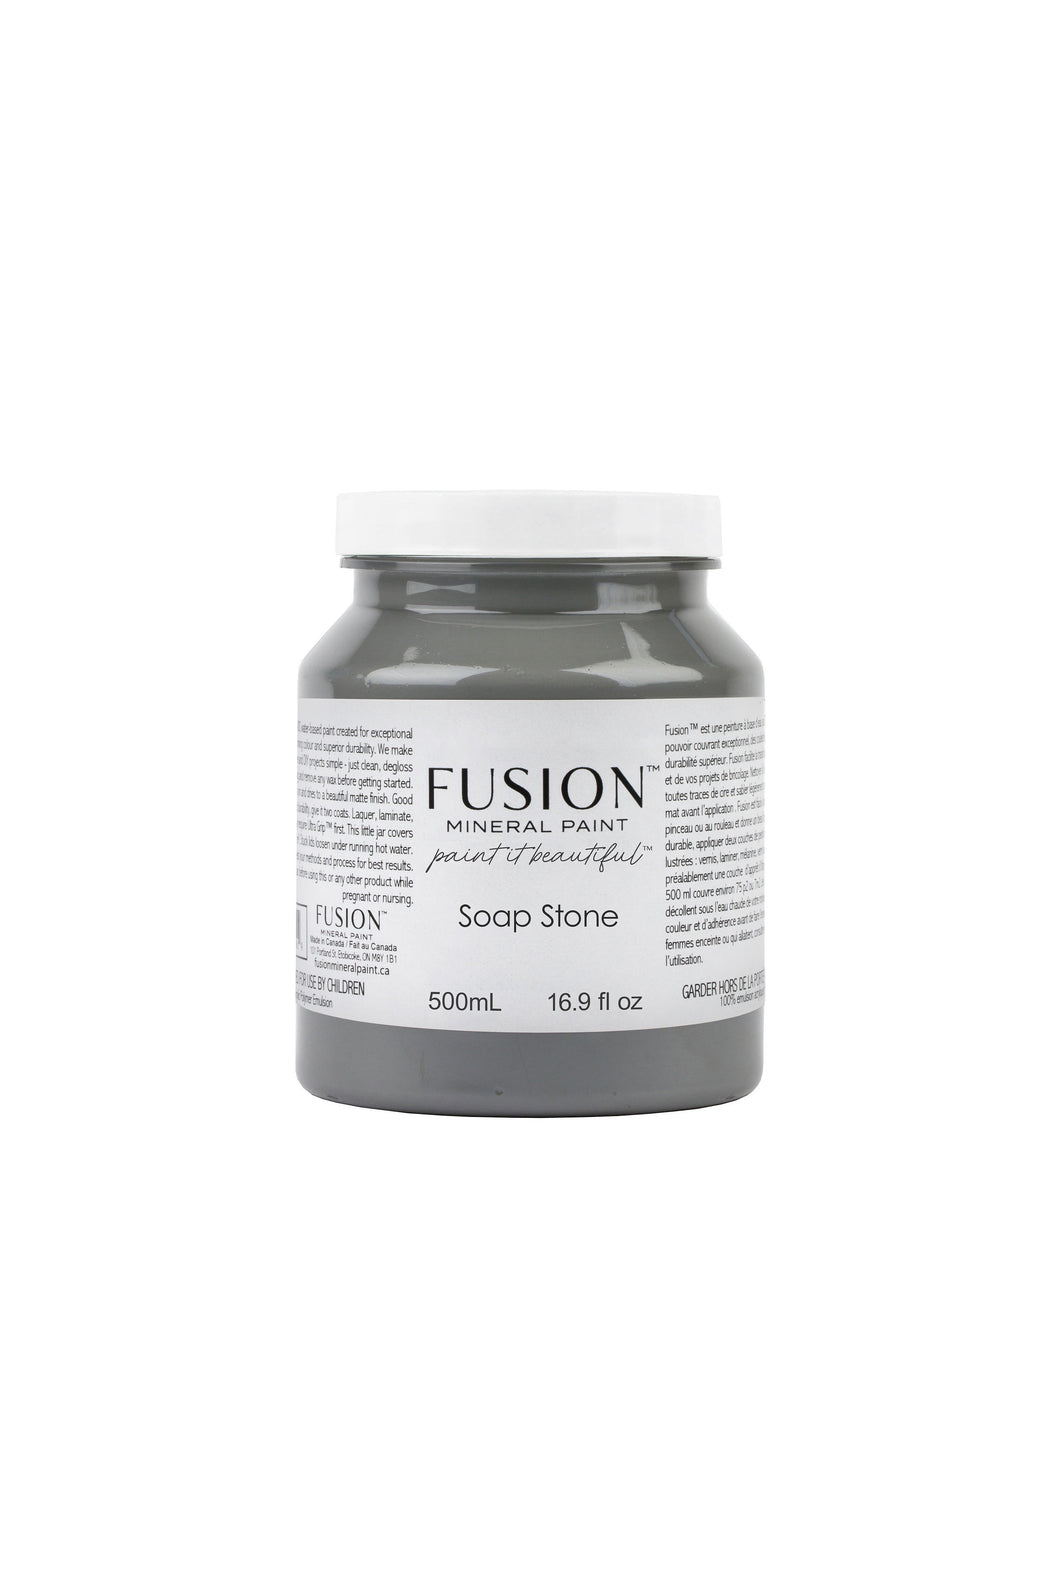 Fusion Mineral Paint - Soapstone 500 ml Jar